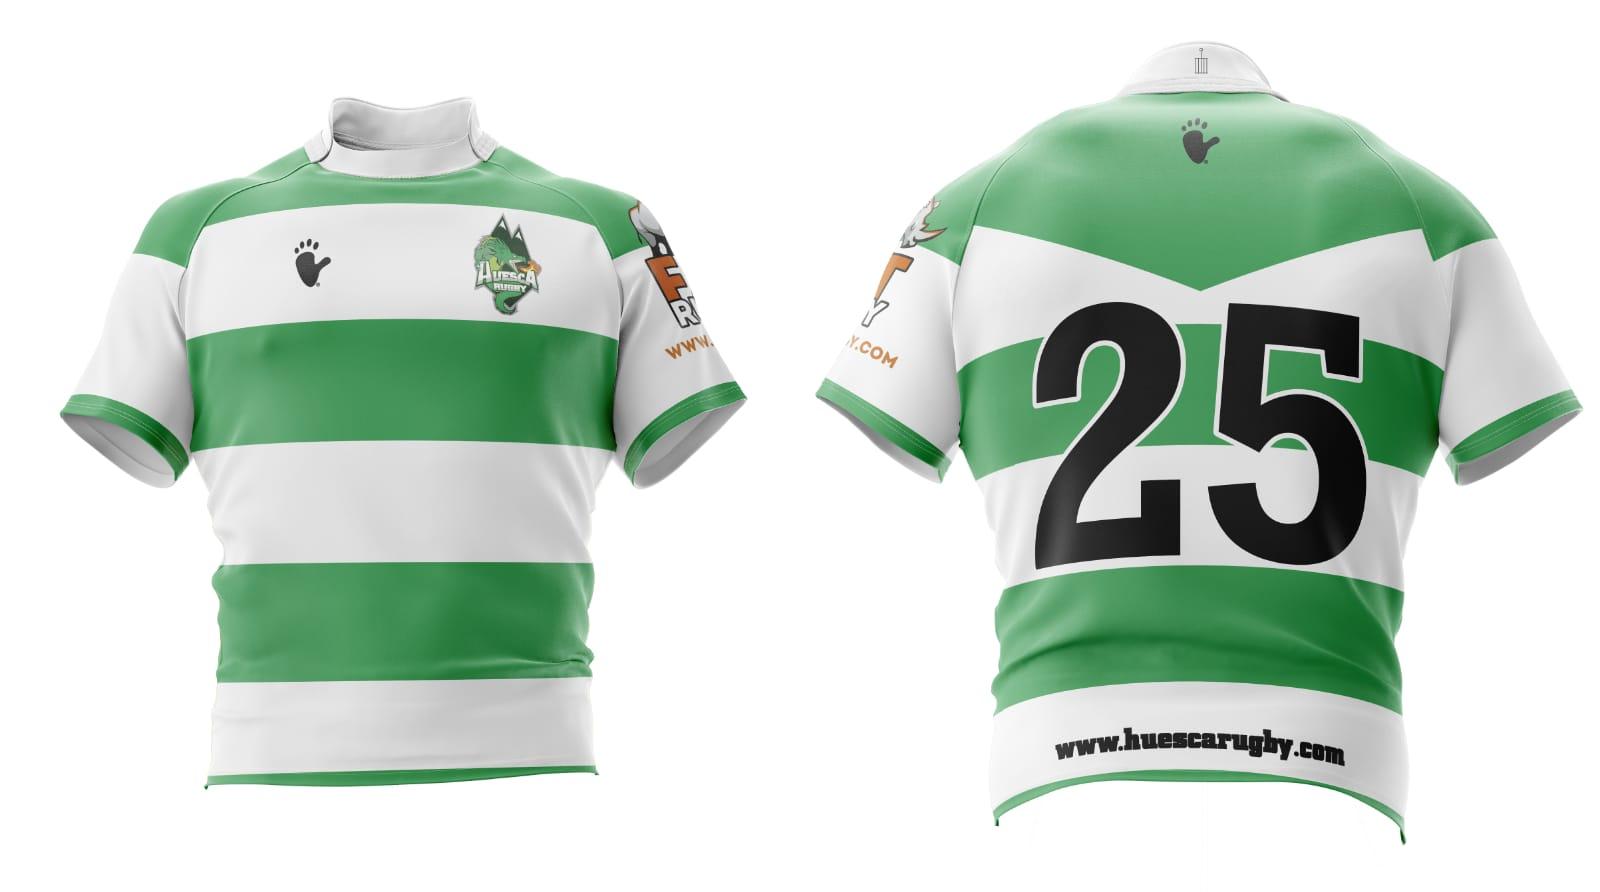 Camiseta Juego Huesca Rugby - Talla M